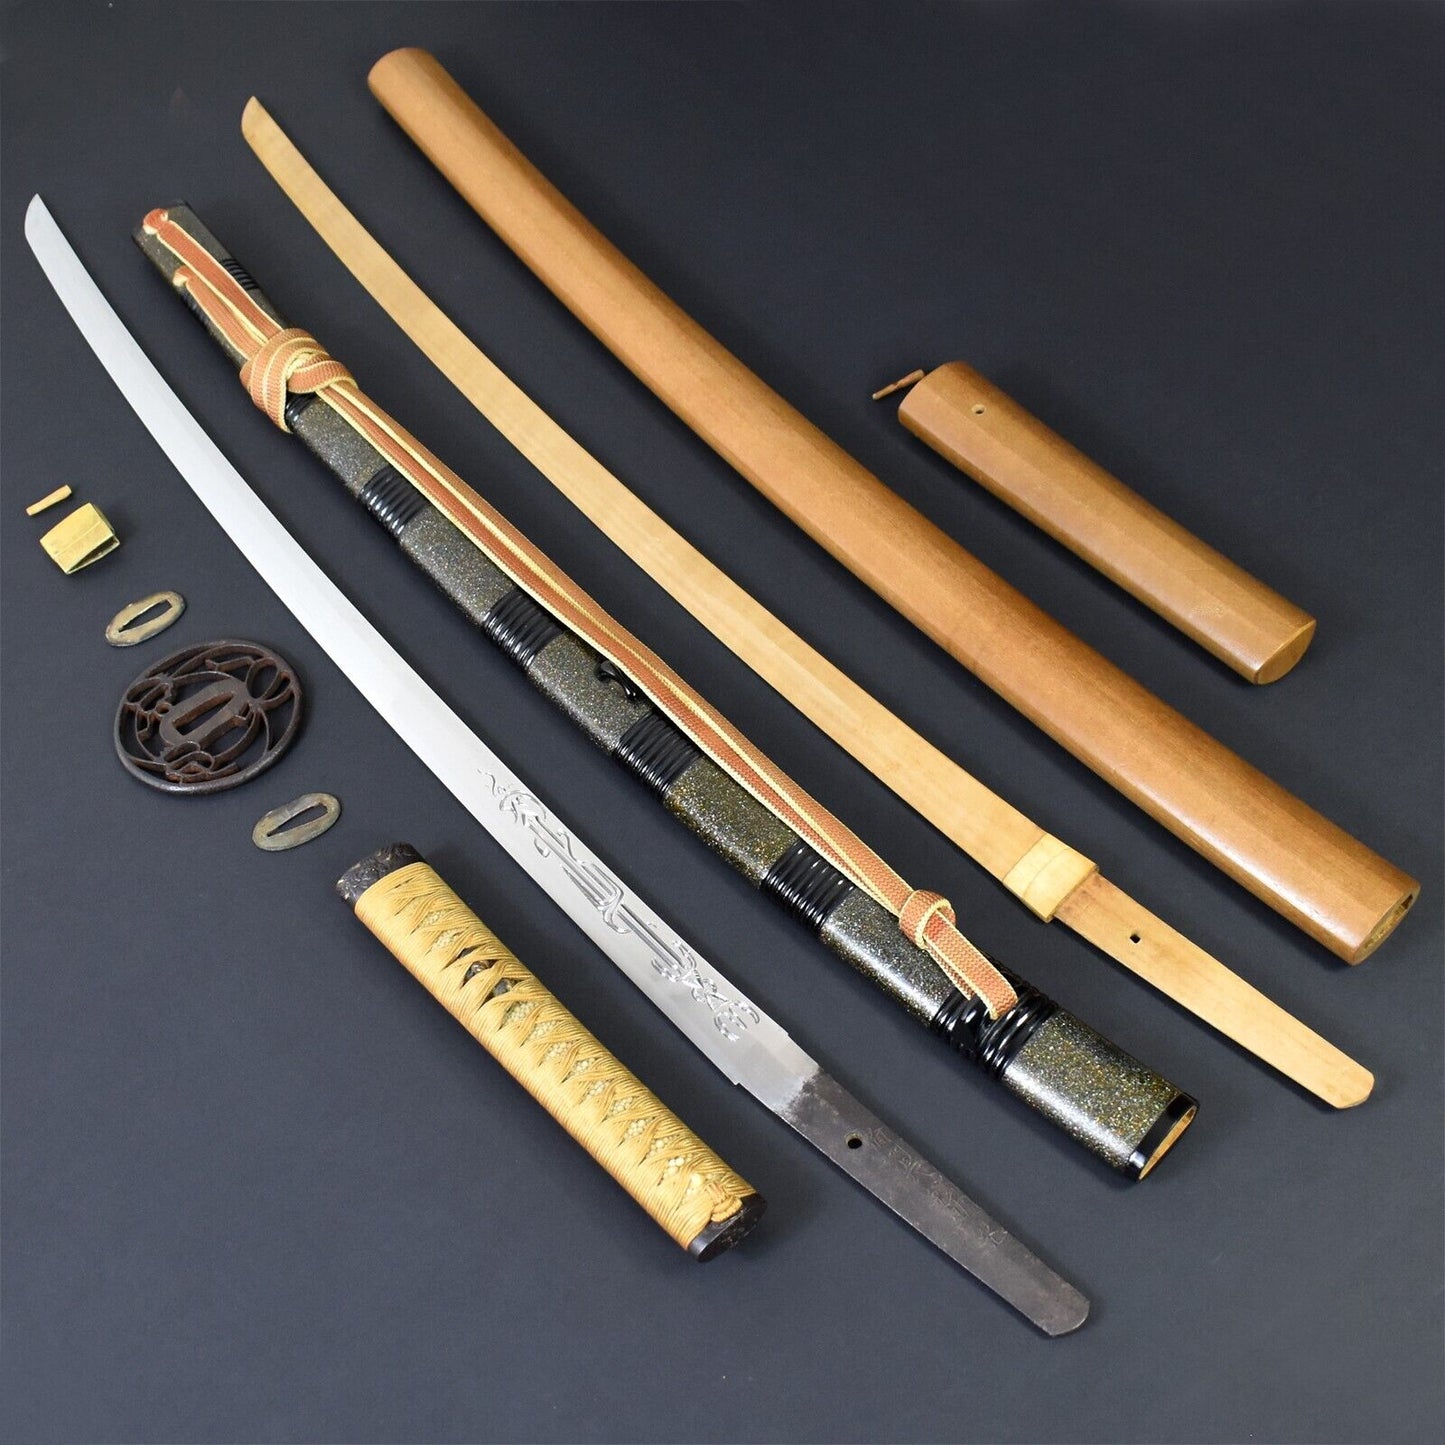 Old Muromachi Era Nihonto Katana Signed Blade Long Sword Samurai Weapon Collectible Japanese.